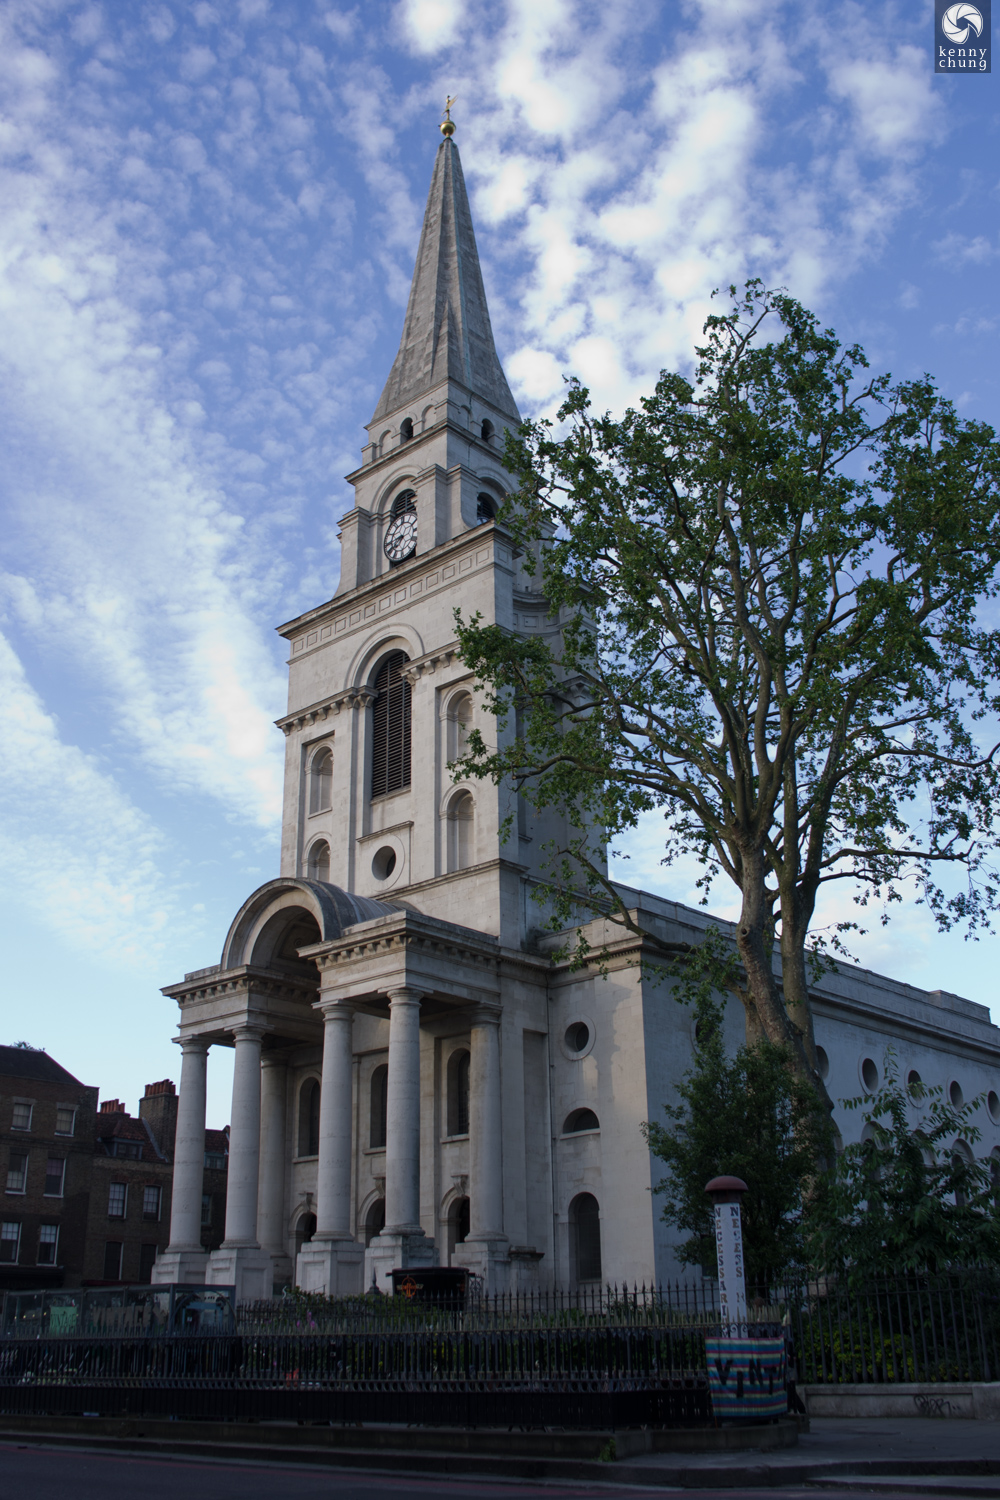 Christ's Church on Commercial Street in Spitalfields